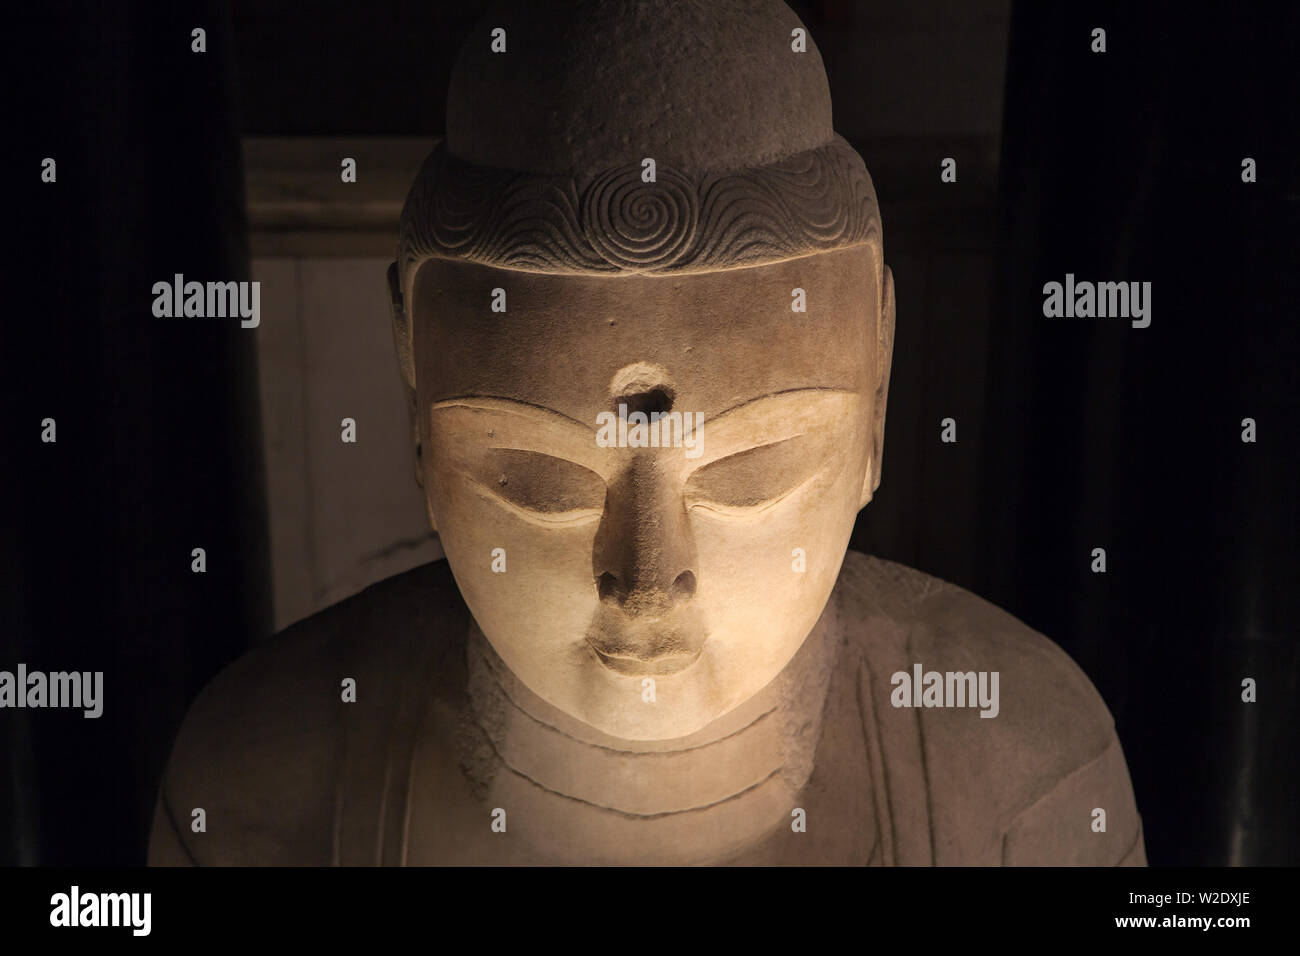 London, United Kingdom - December 21, 2018: Amitabha Buddha from Hancui displayed in the Bristish Museum, London, United Kingdom. Stock Photo